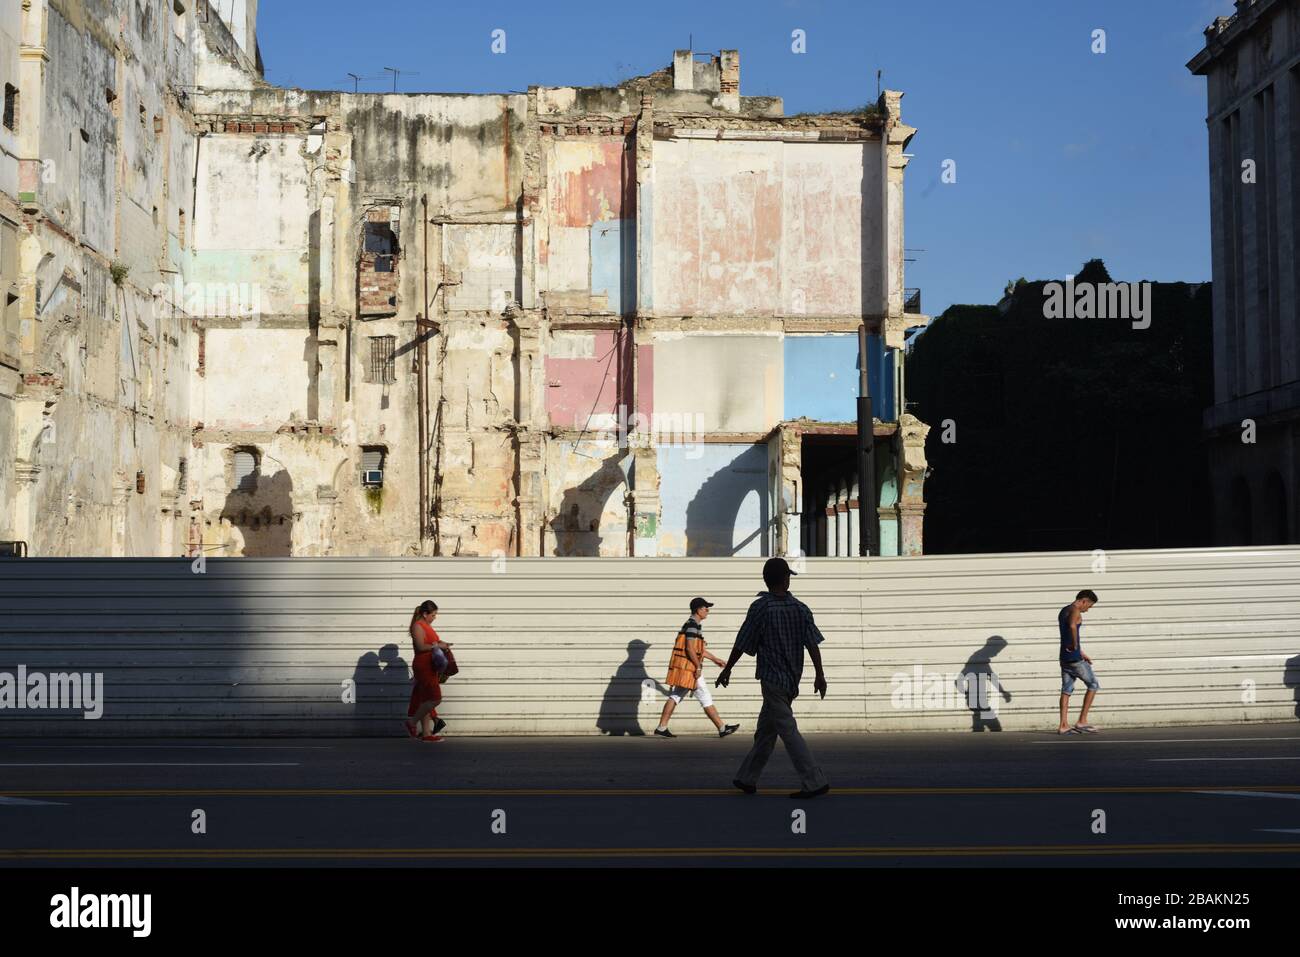 People, demolished building, street, 2014, Cuba Stock Photo